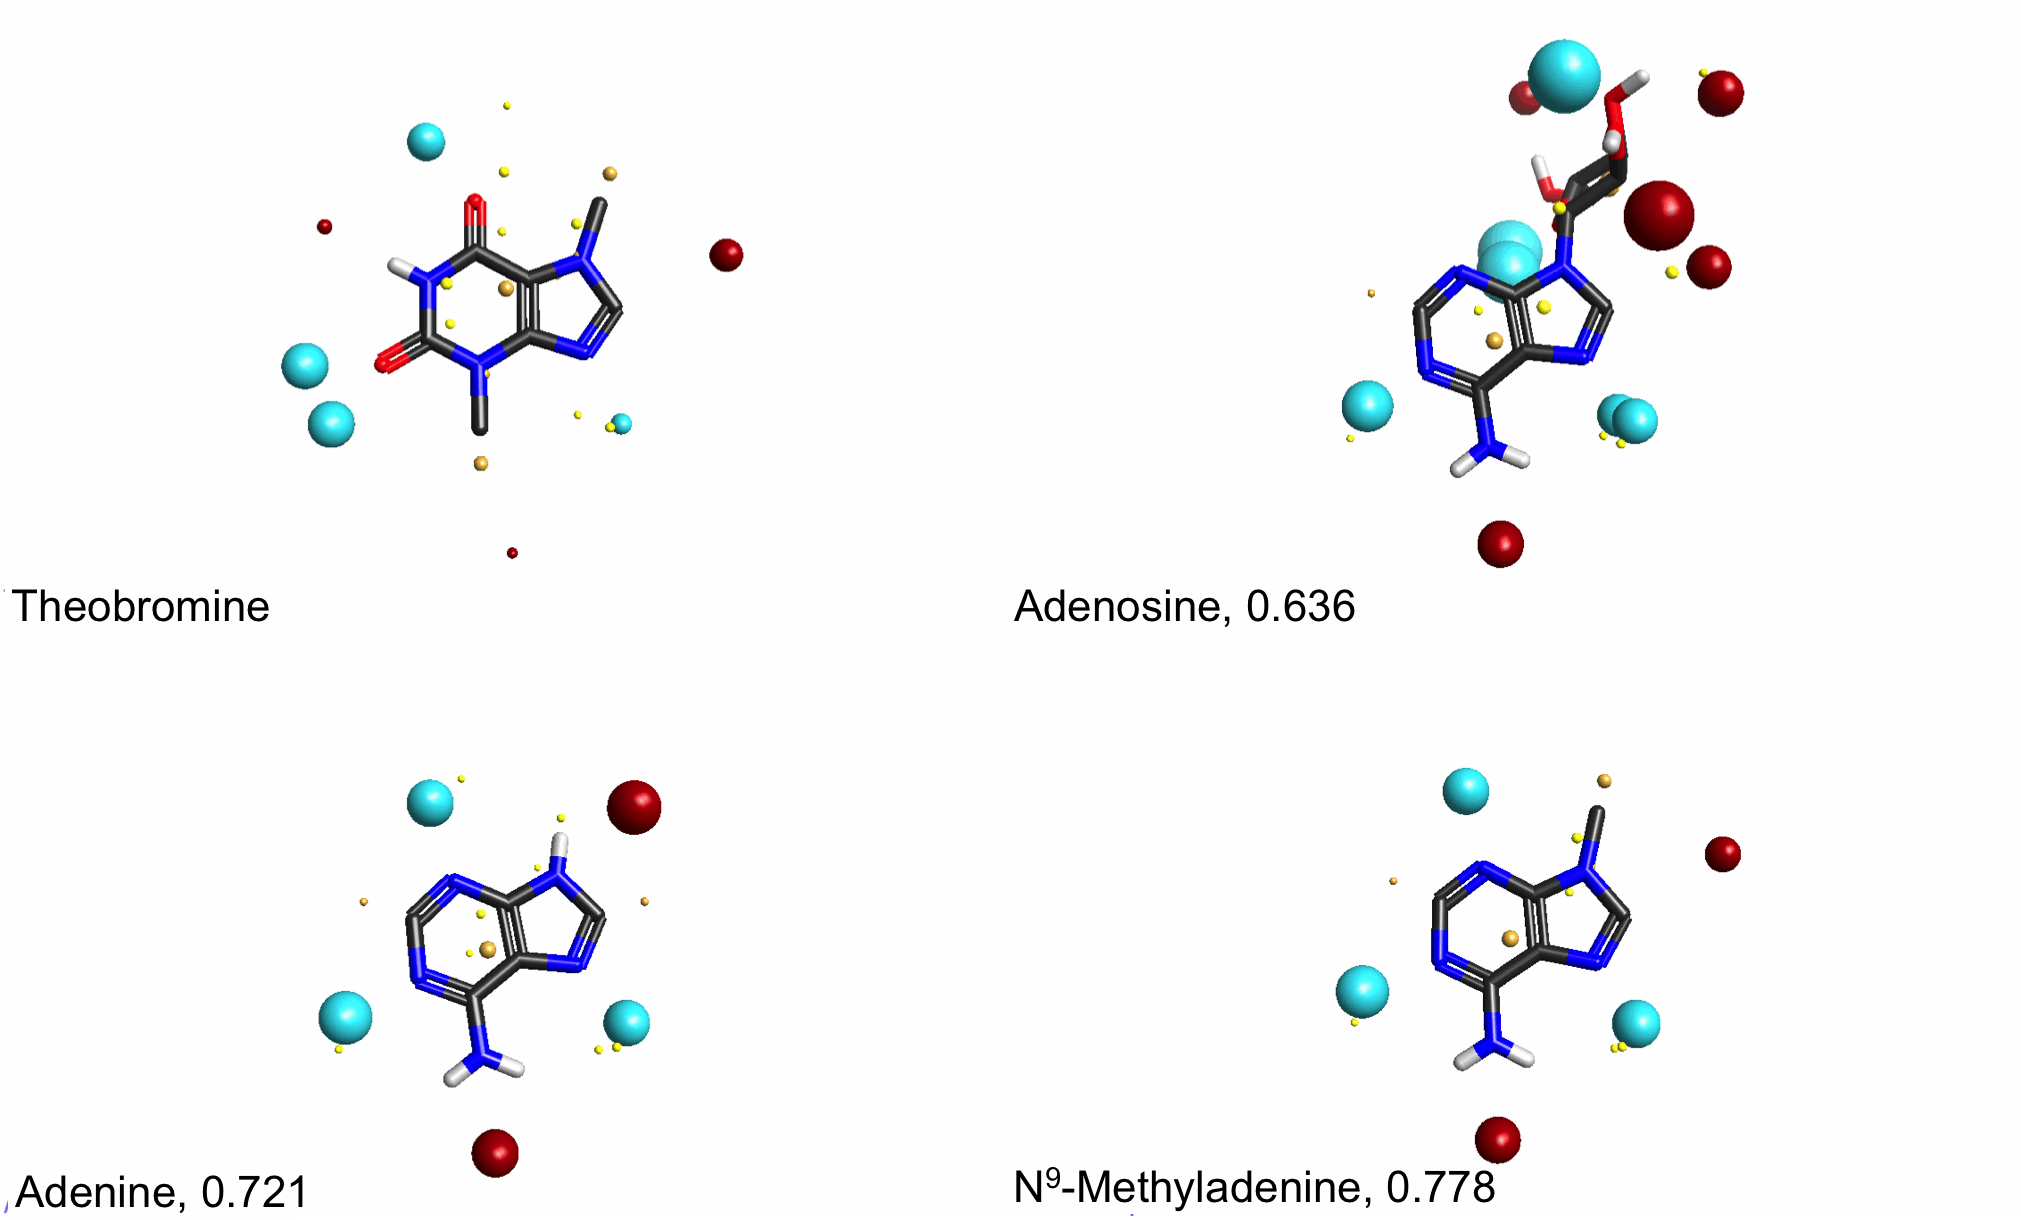 Theobromine and Adenosine, Adenine and N9-methyladeninea